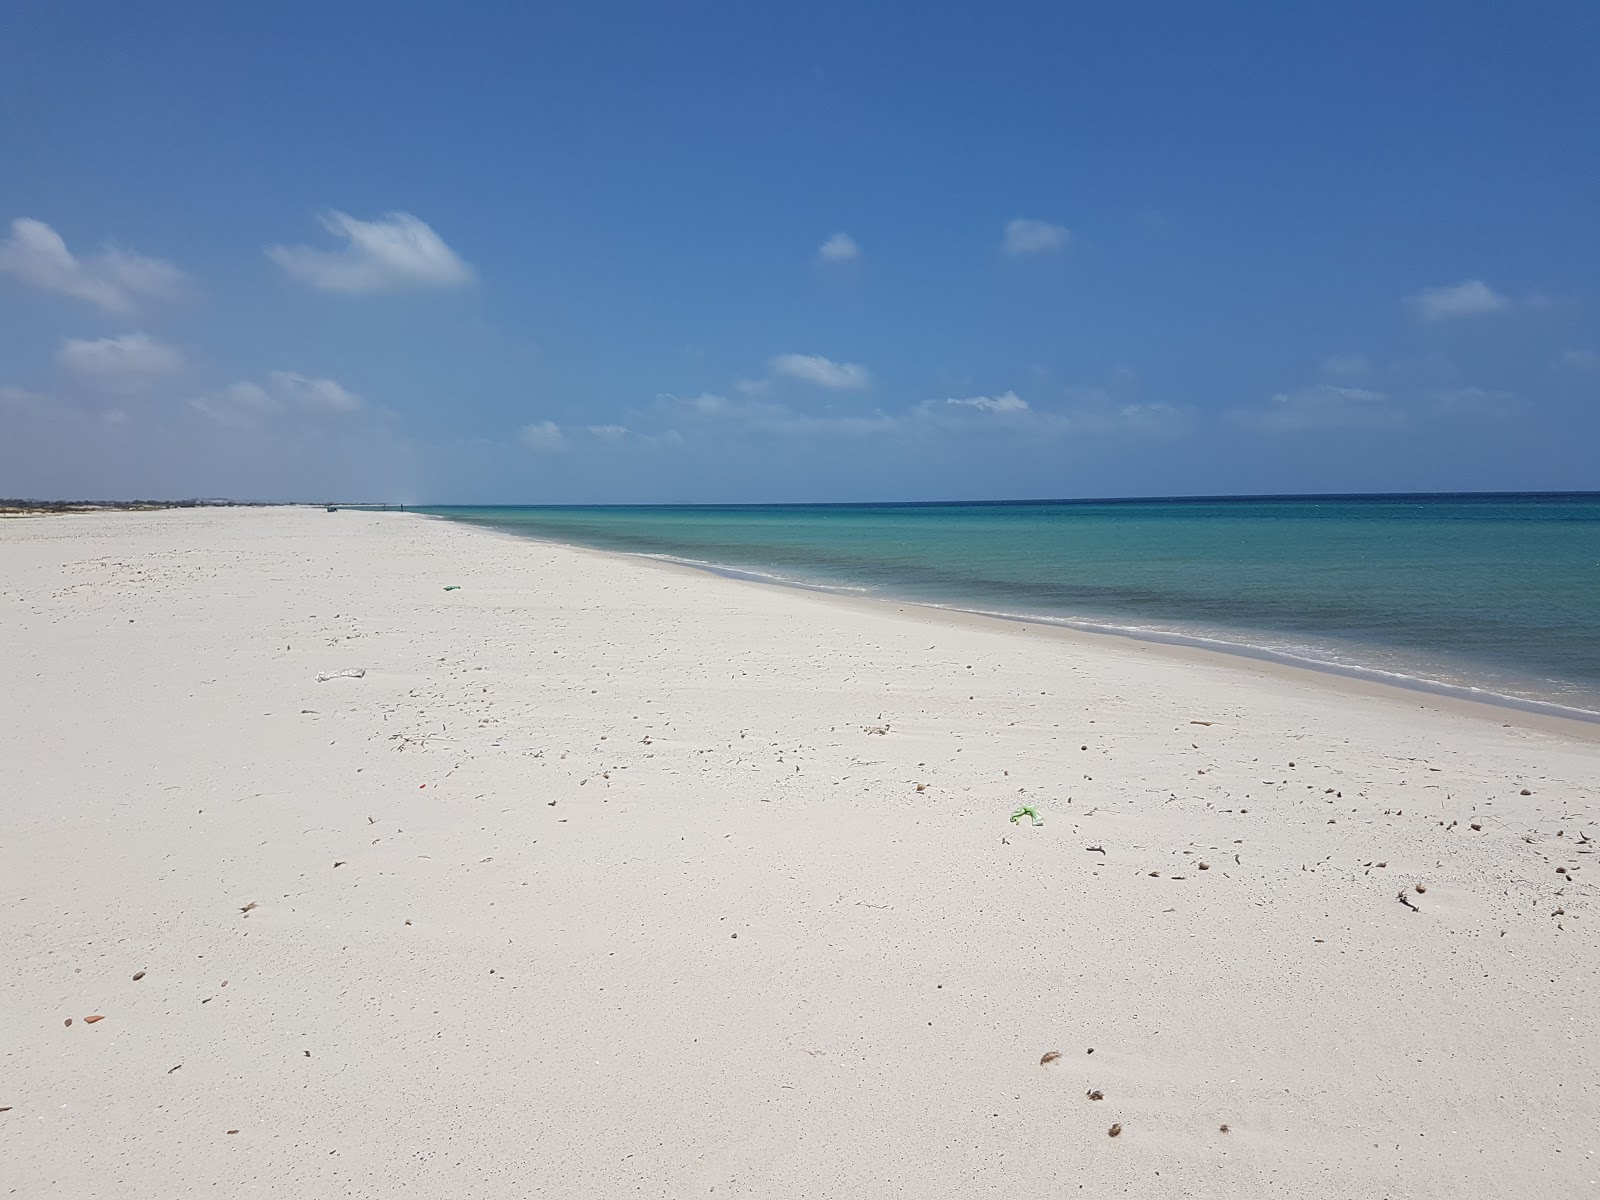 Foto av Menzel Or beach med ljus fin sand yta